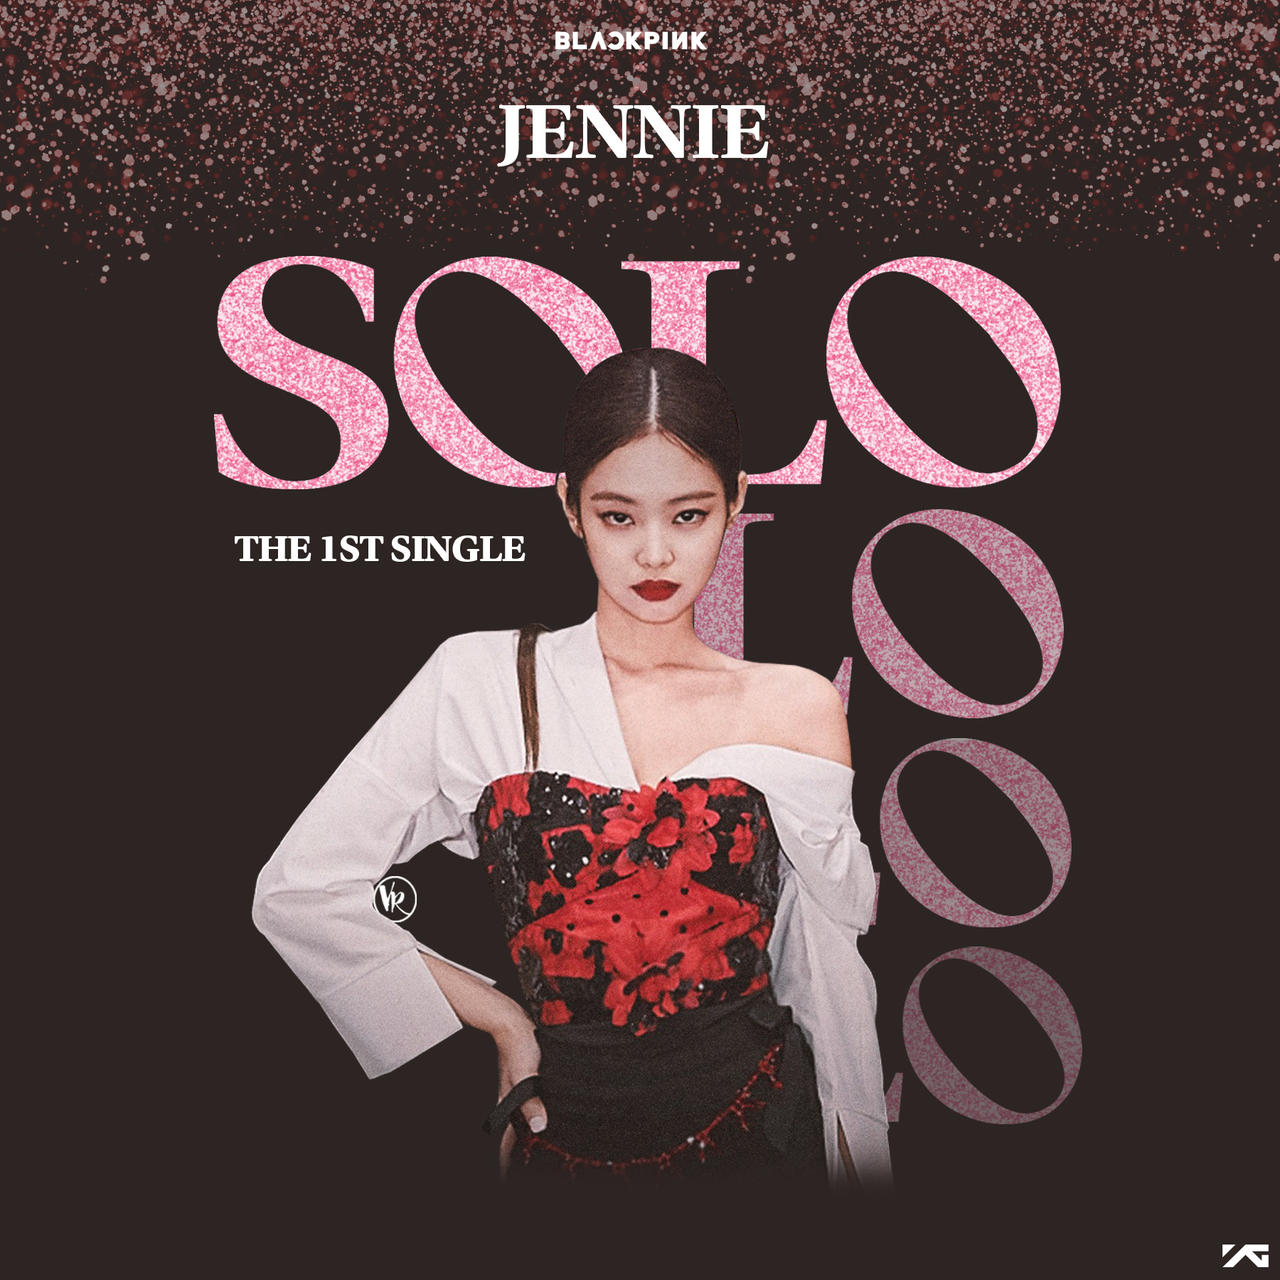 JENNIE - Solo (5) by vanessa-van3ss4 on DeviantArt